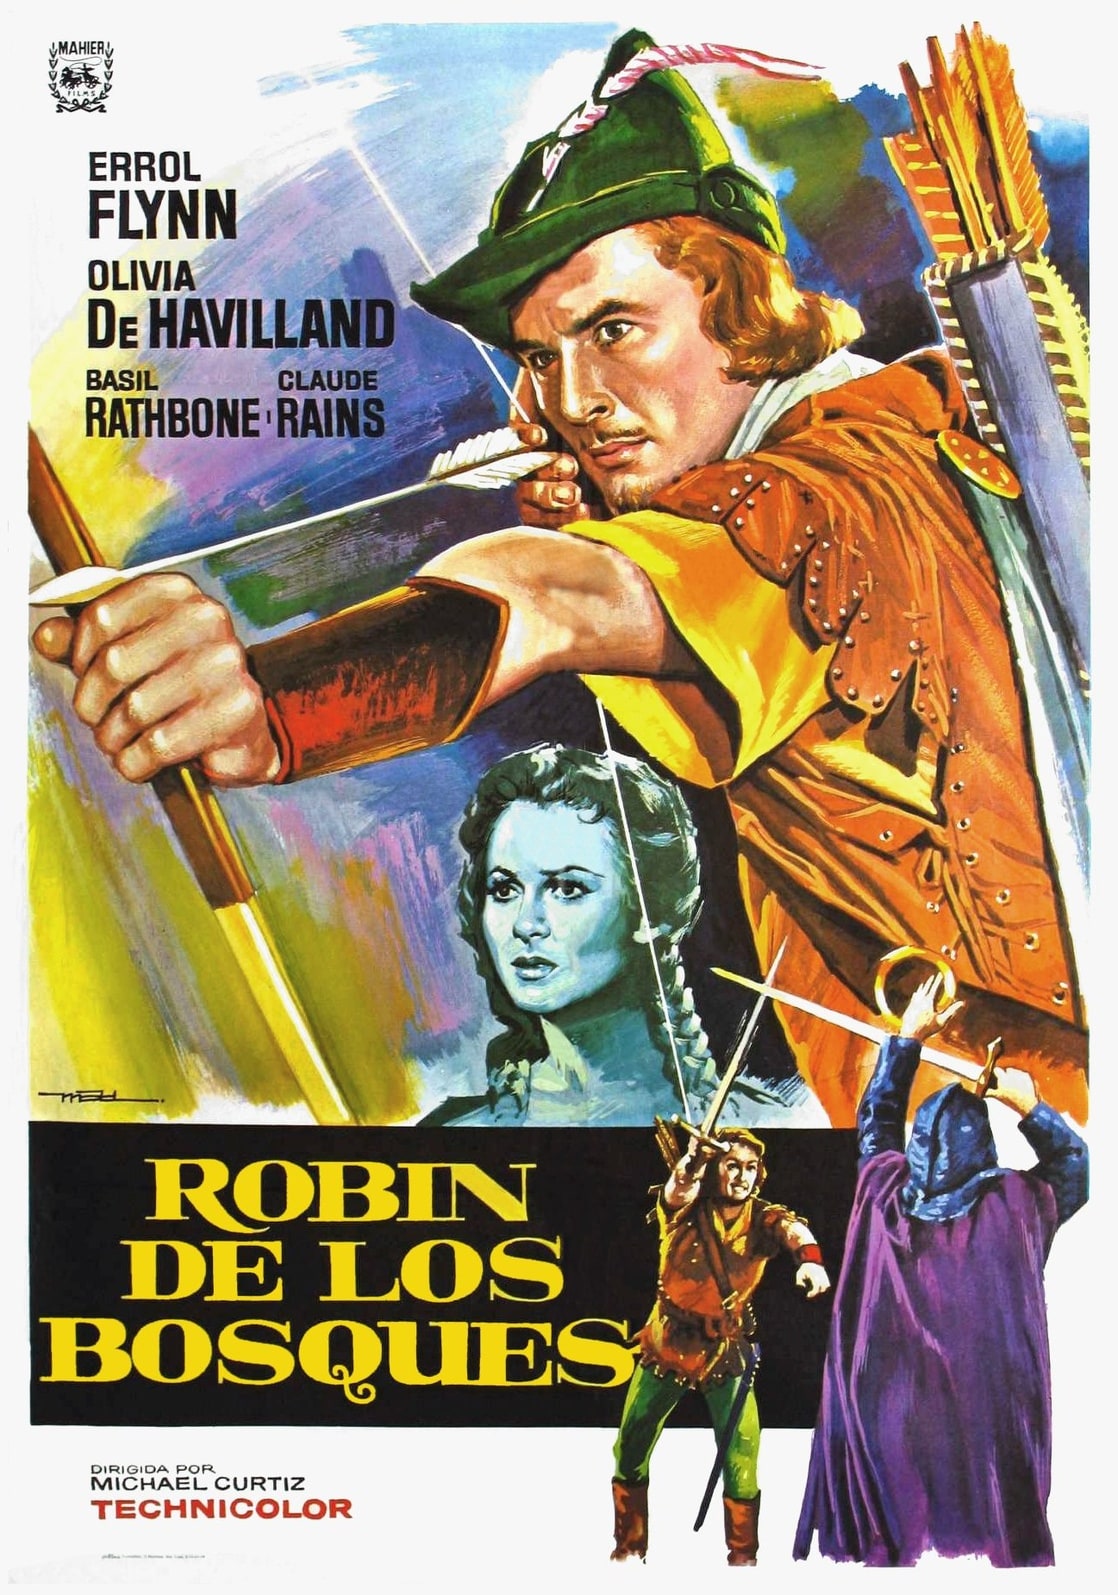 1938 The Adventures Of Robin Hood